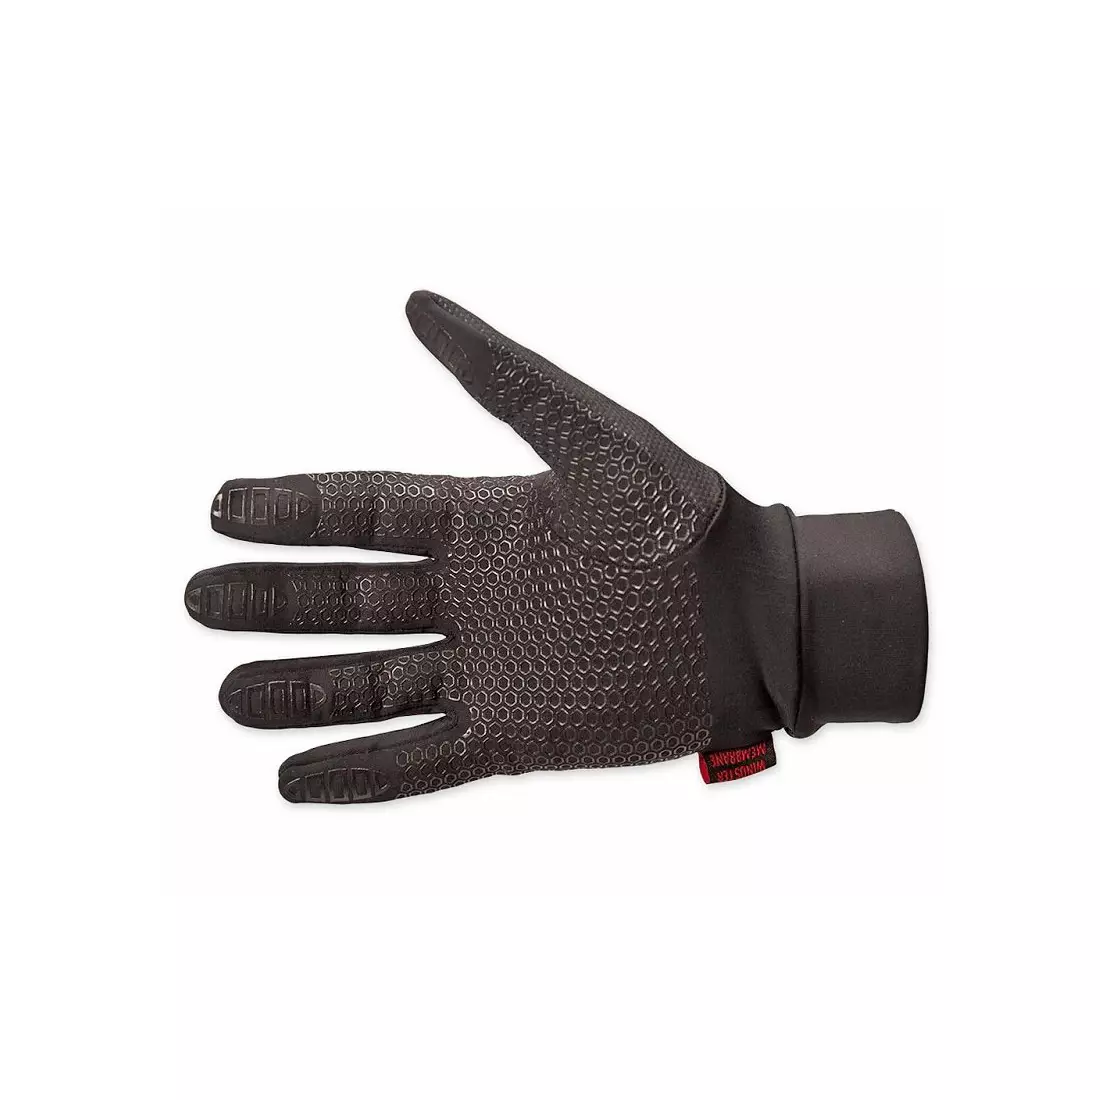 ROGELLI LAVAL thin sports gloves, membrane 006.109 black